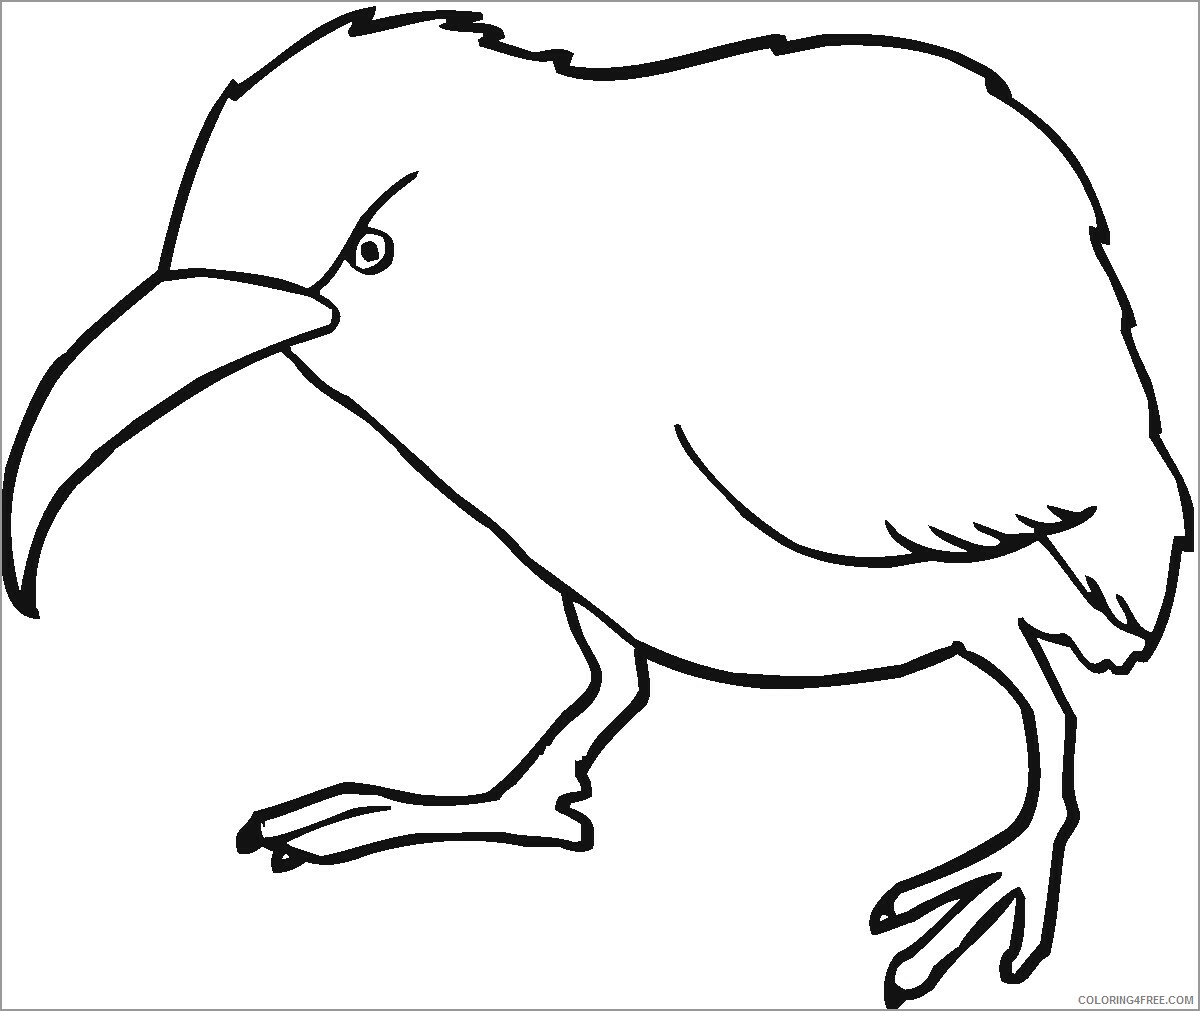 Kiwi Coloring Pages Animal Printable Sheets kiwi for kids 2021 3031 Coloring4free